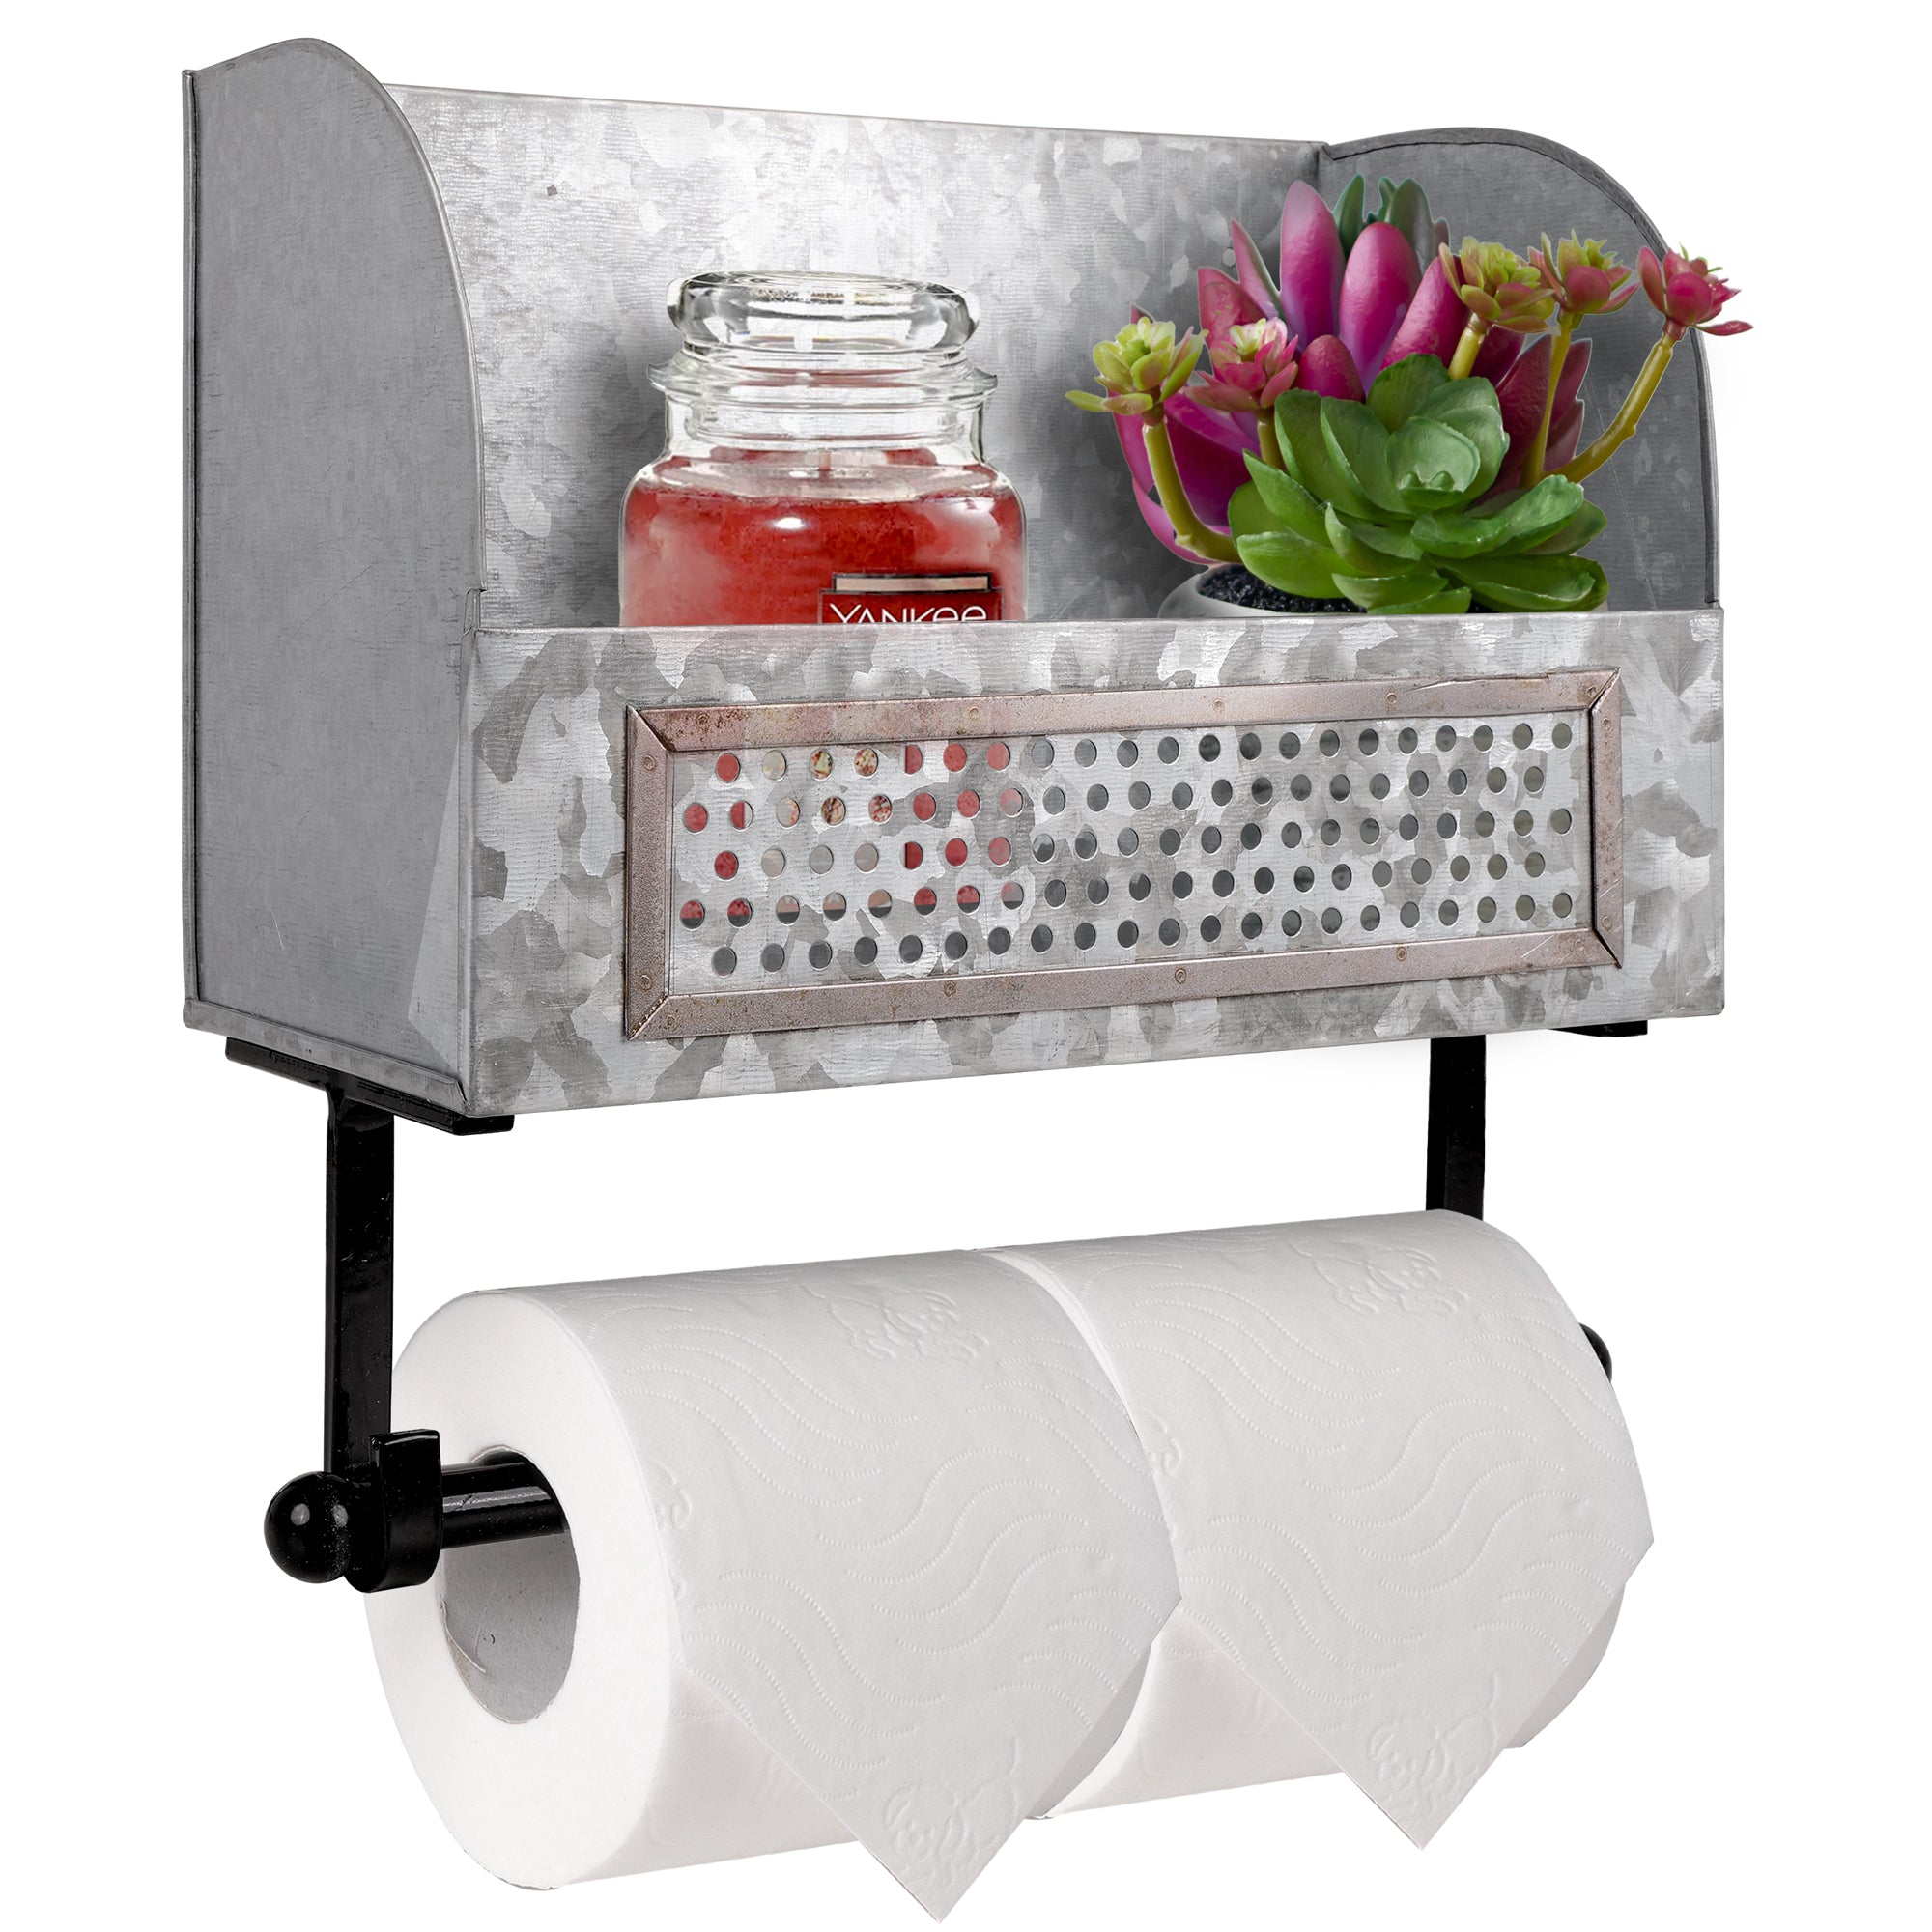 Self-Adhesive Paper Towel Holders For Bathroom Kitchen Tissue Holder  Hanging Toilet Paper Holder Roll Paper Holder Under Cabinet Towel Rack  Stand Home